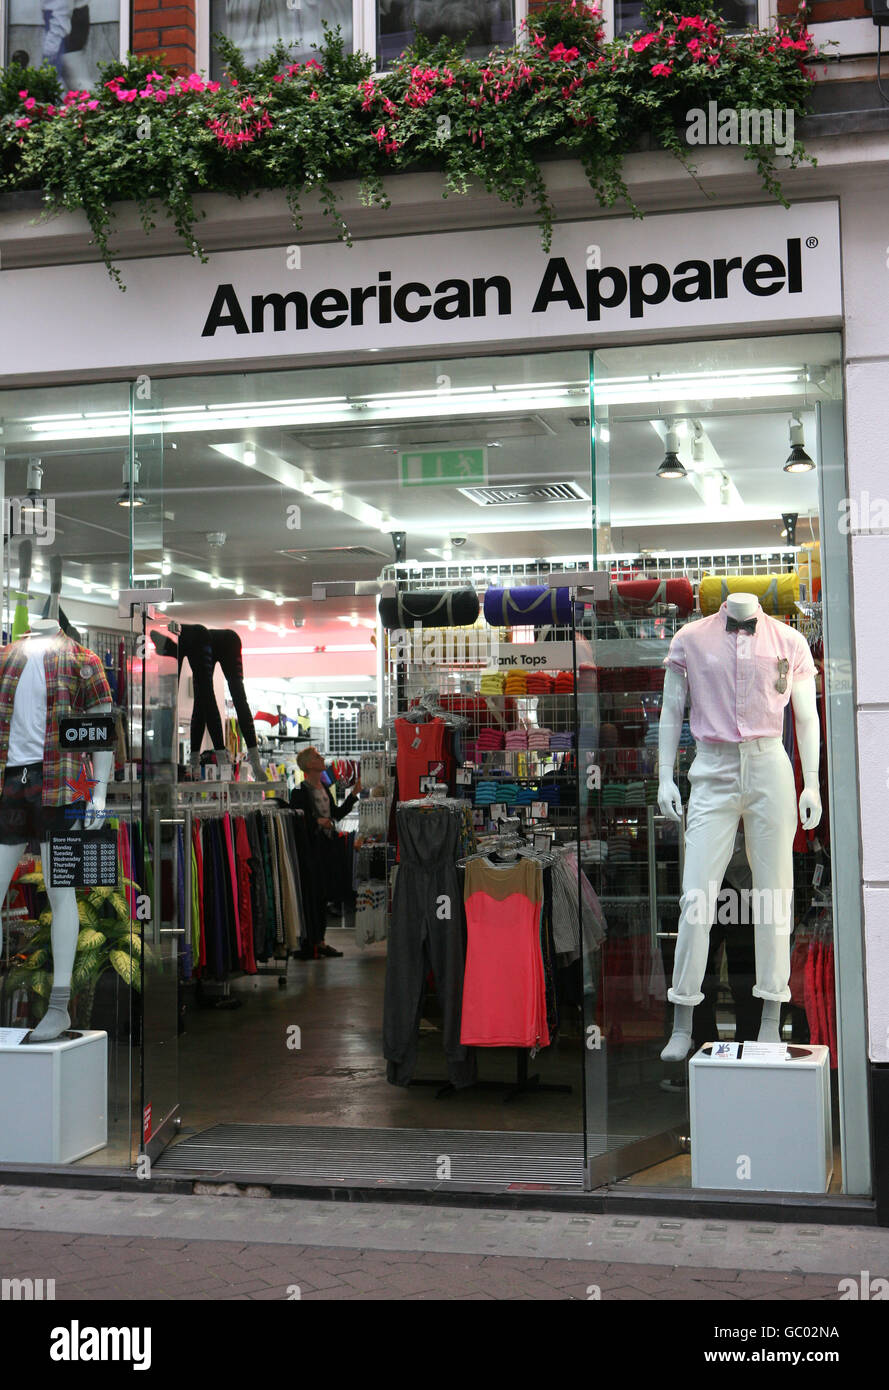 American Apparel Stock Photo: 110640246 - Alamy